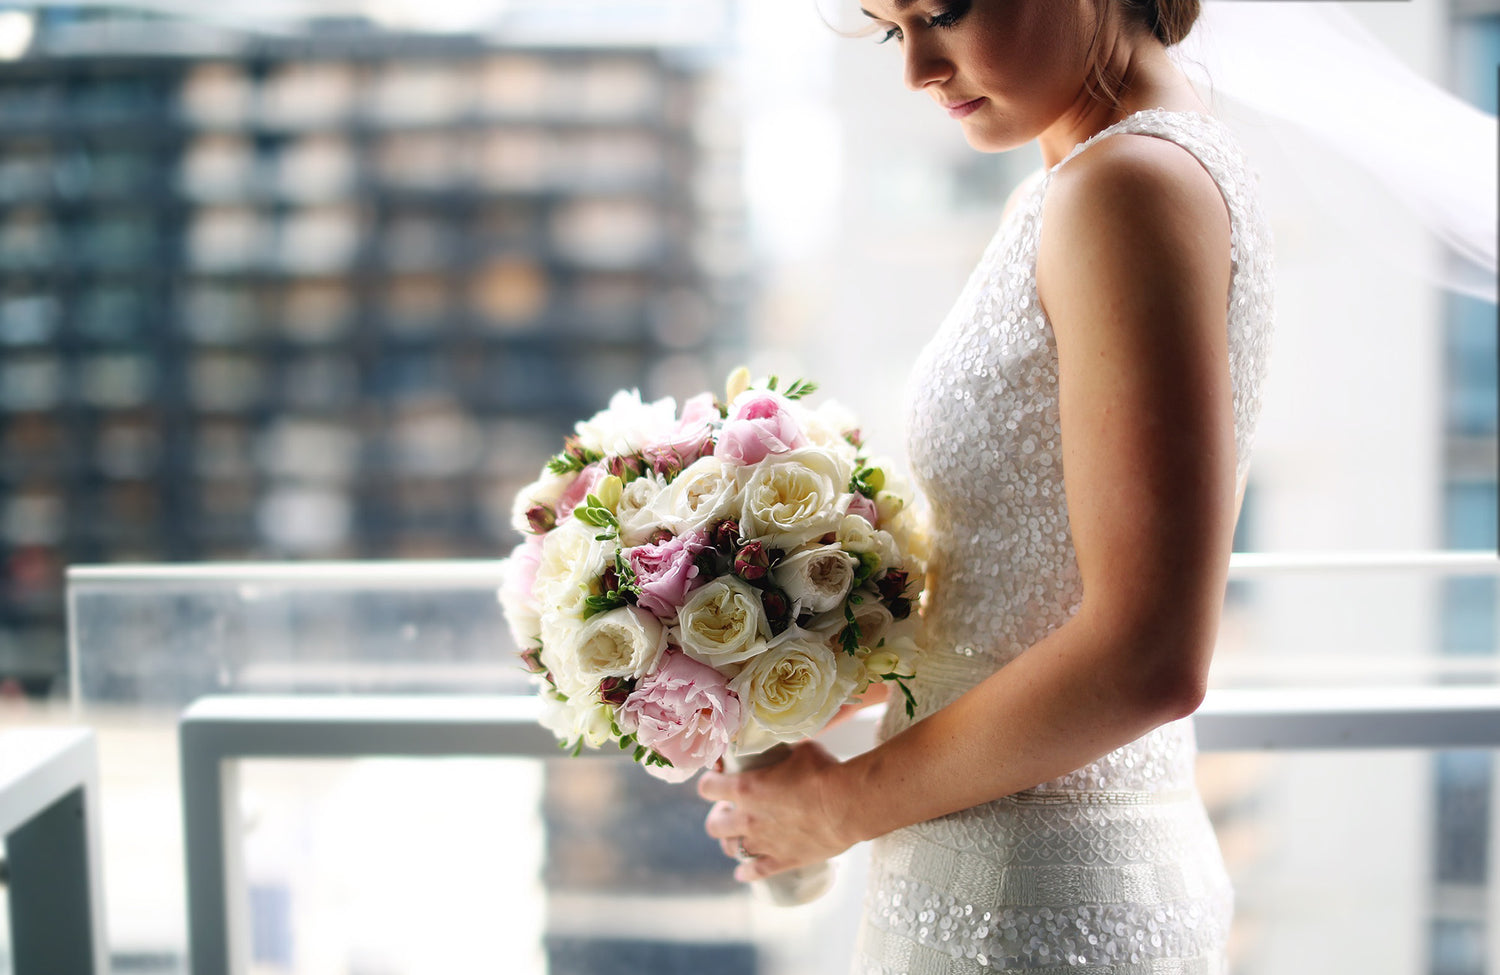 Bride holding bridal bouquet wedding flowers